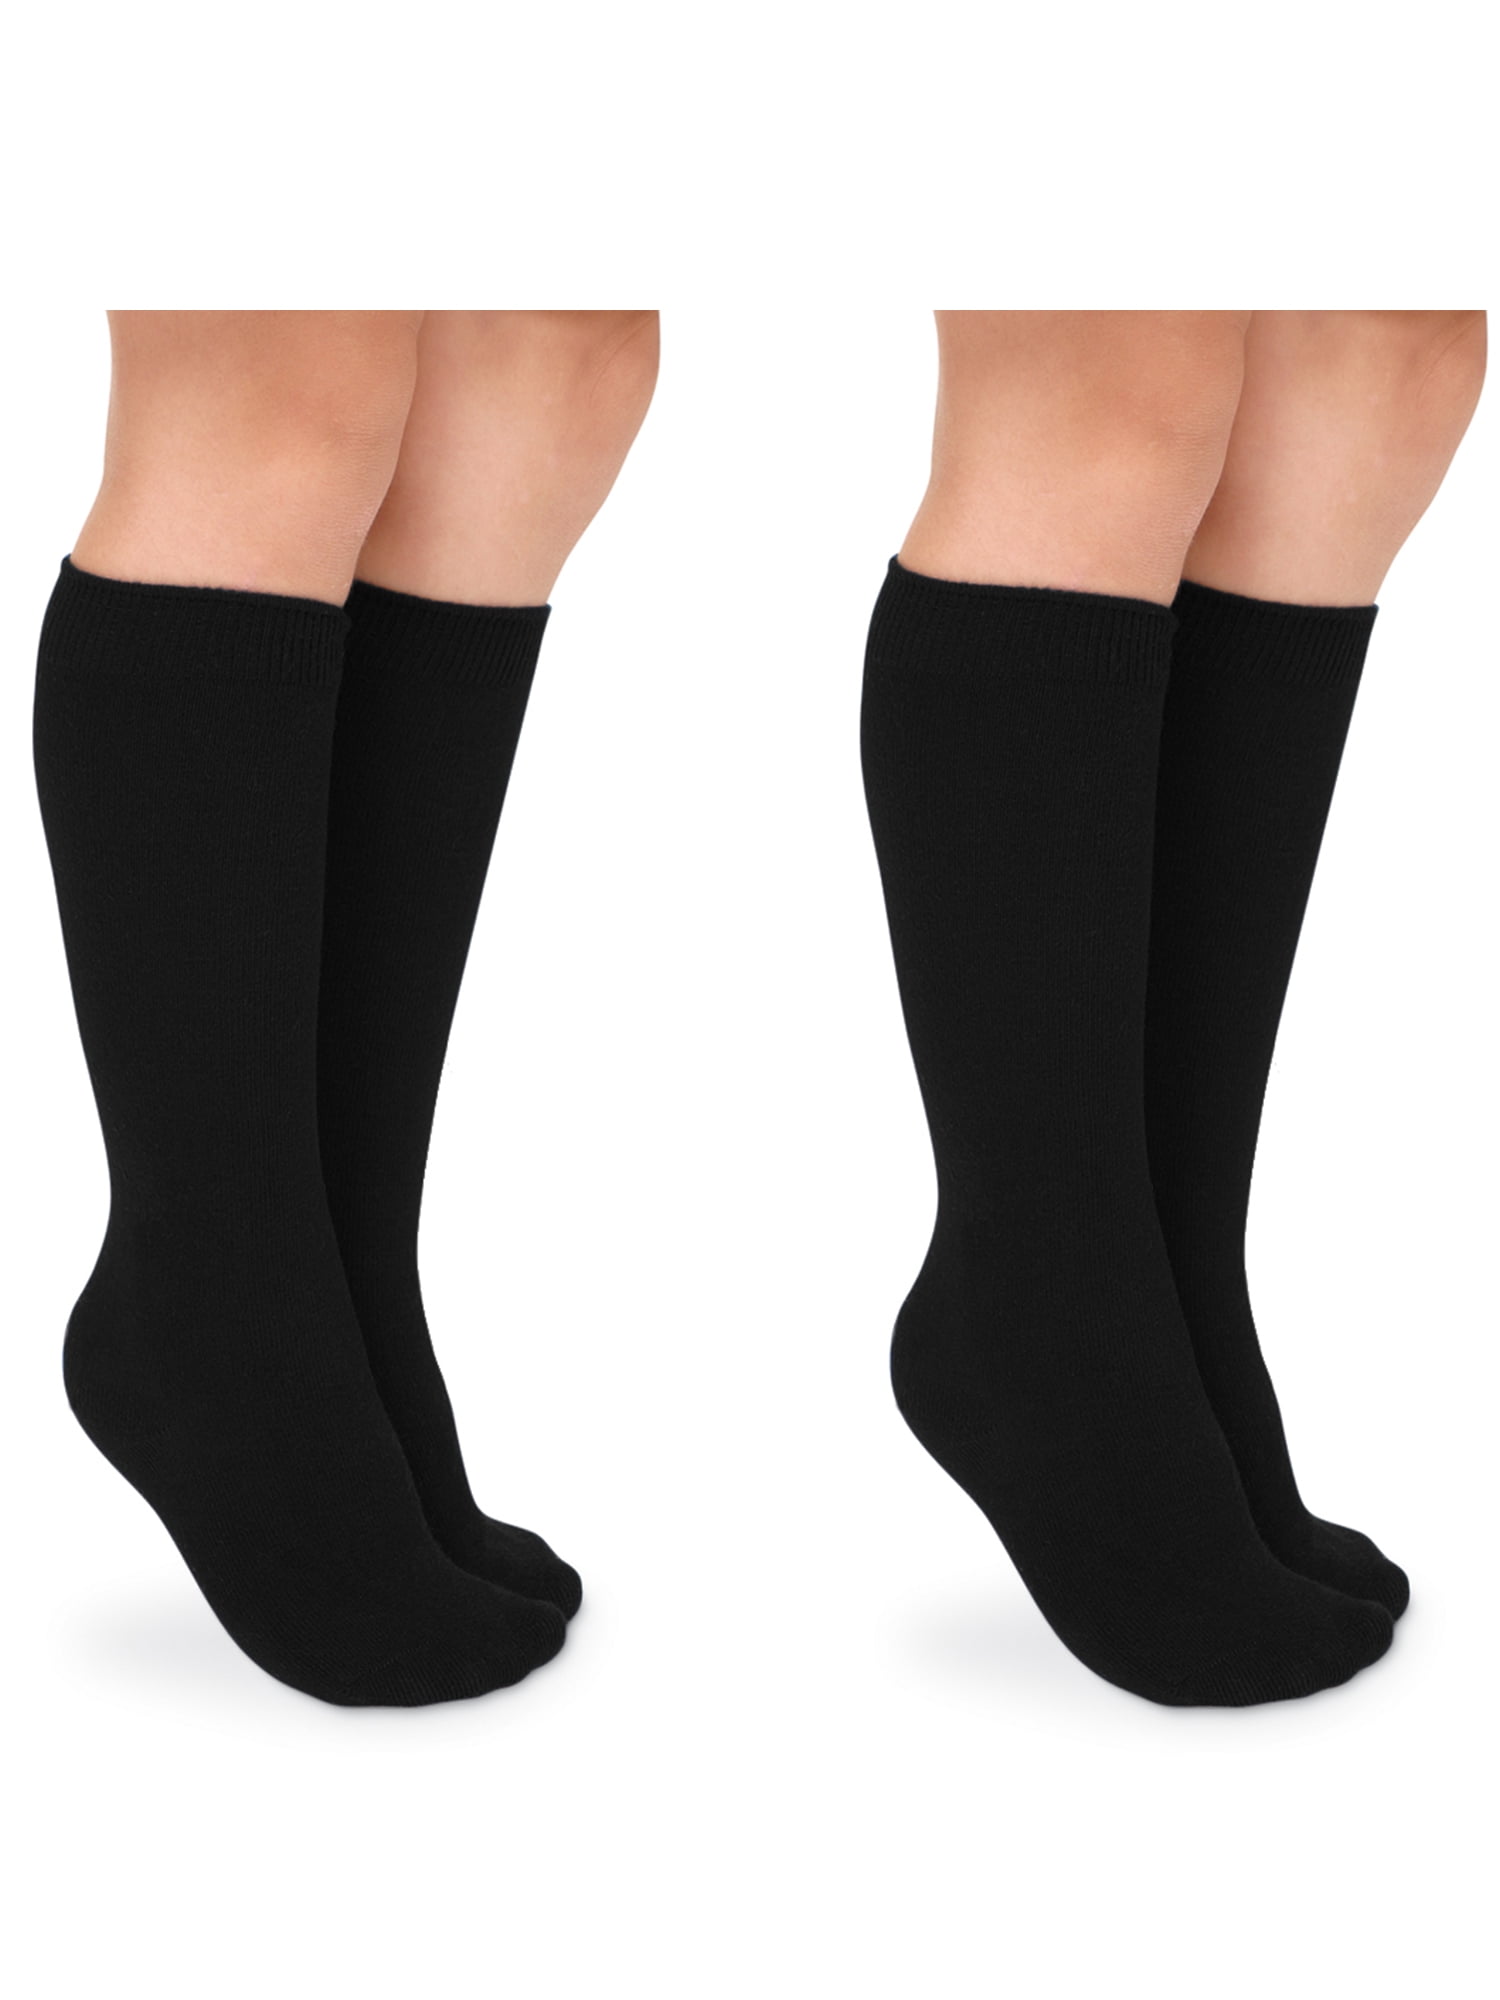 Jefferies Socks Girls Socks, 2 Pack School Uniform Smooth Toe